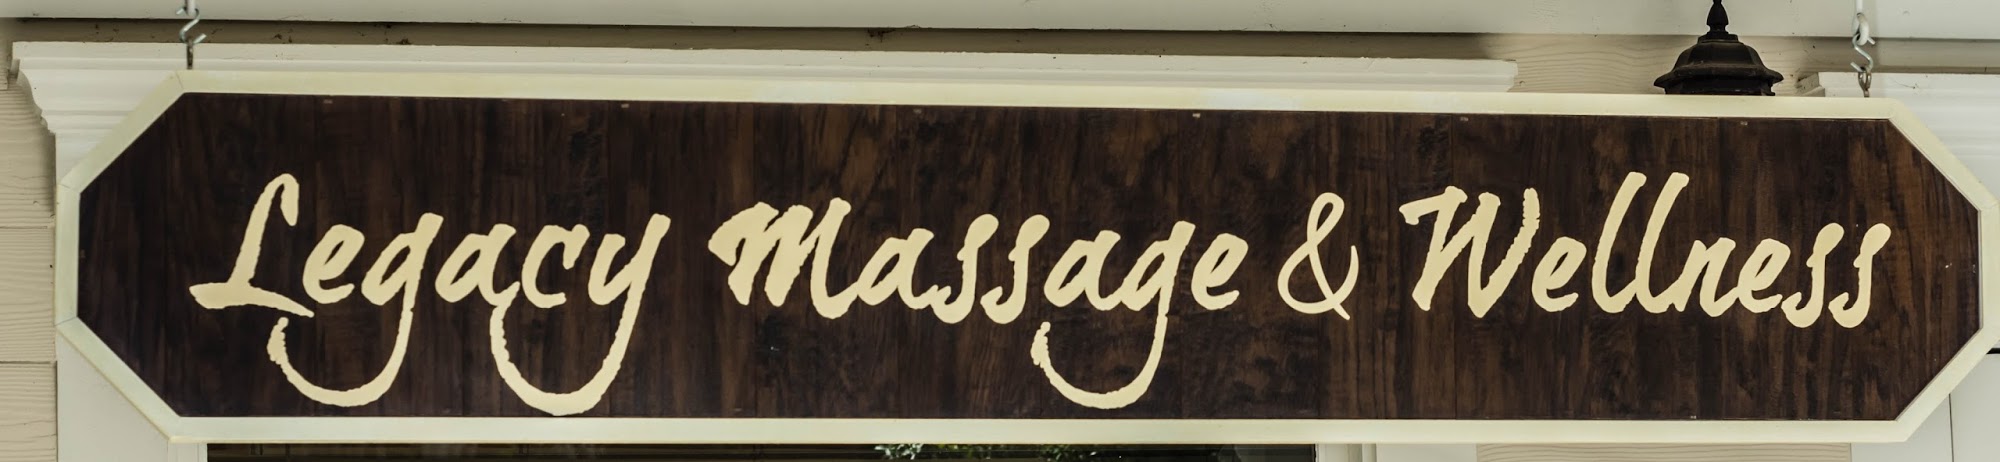 Legacy Massage And Wellness